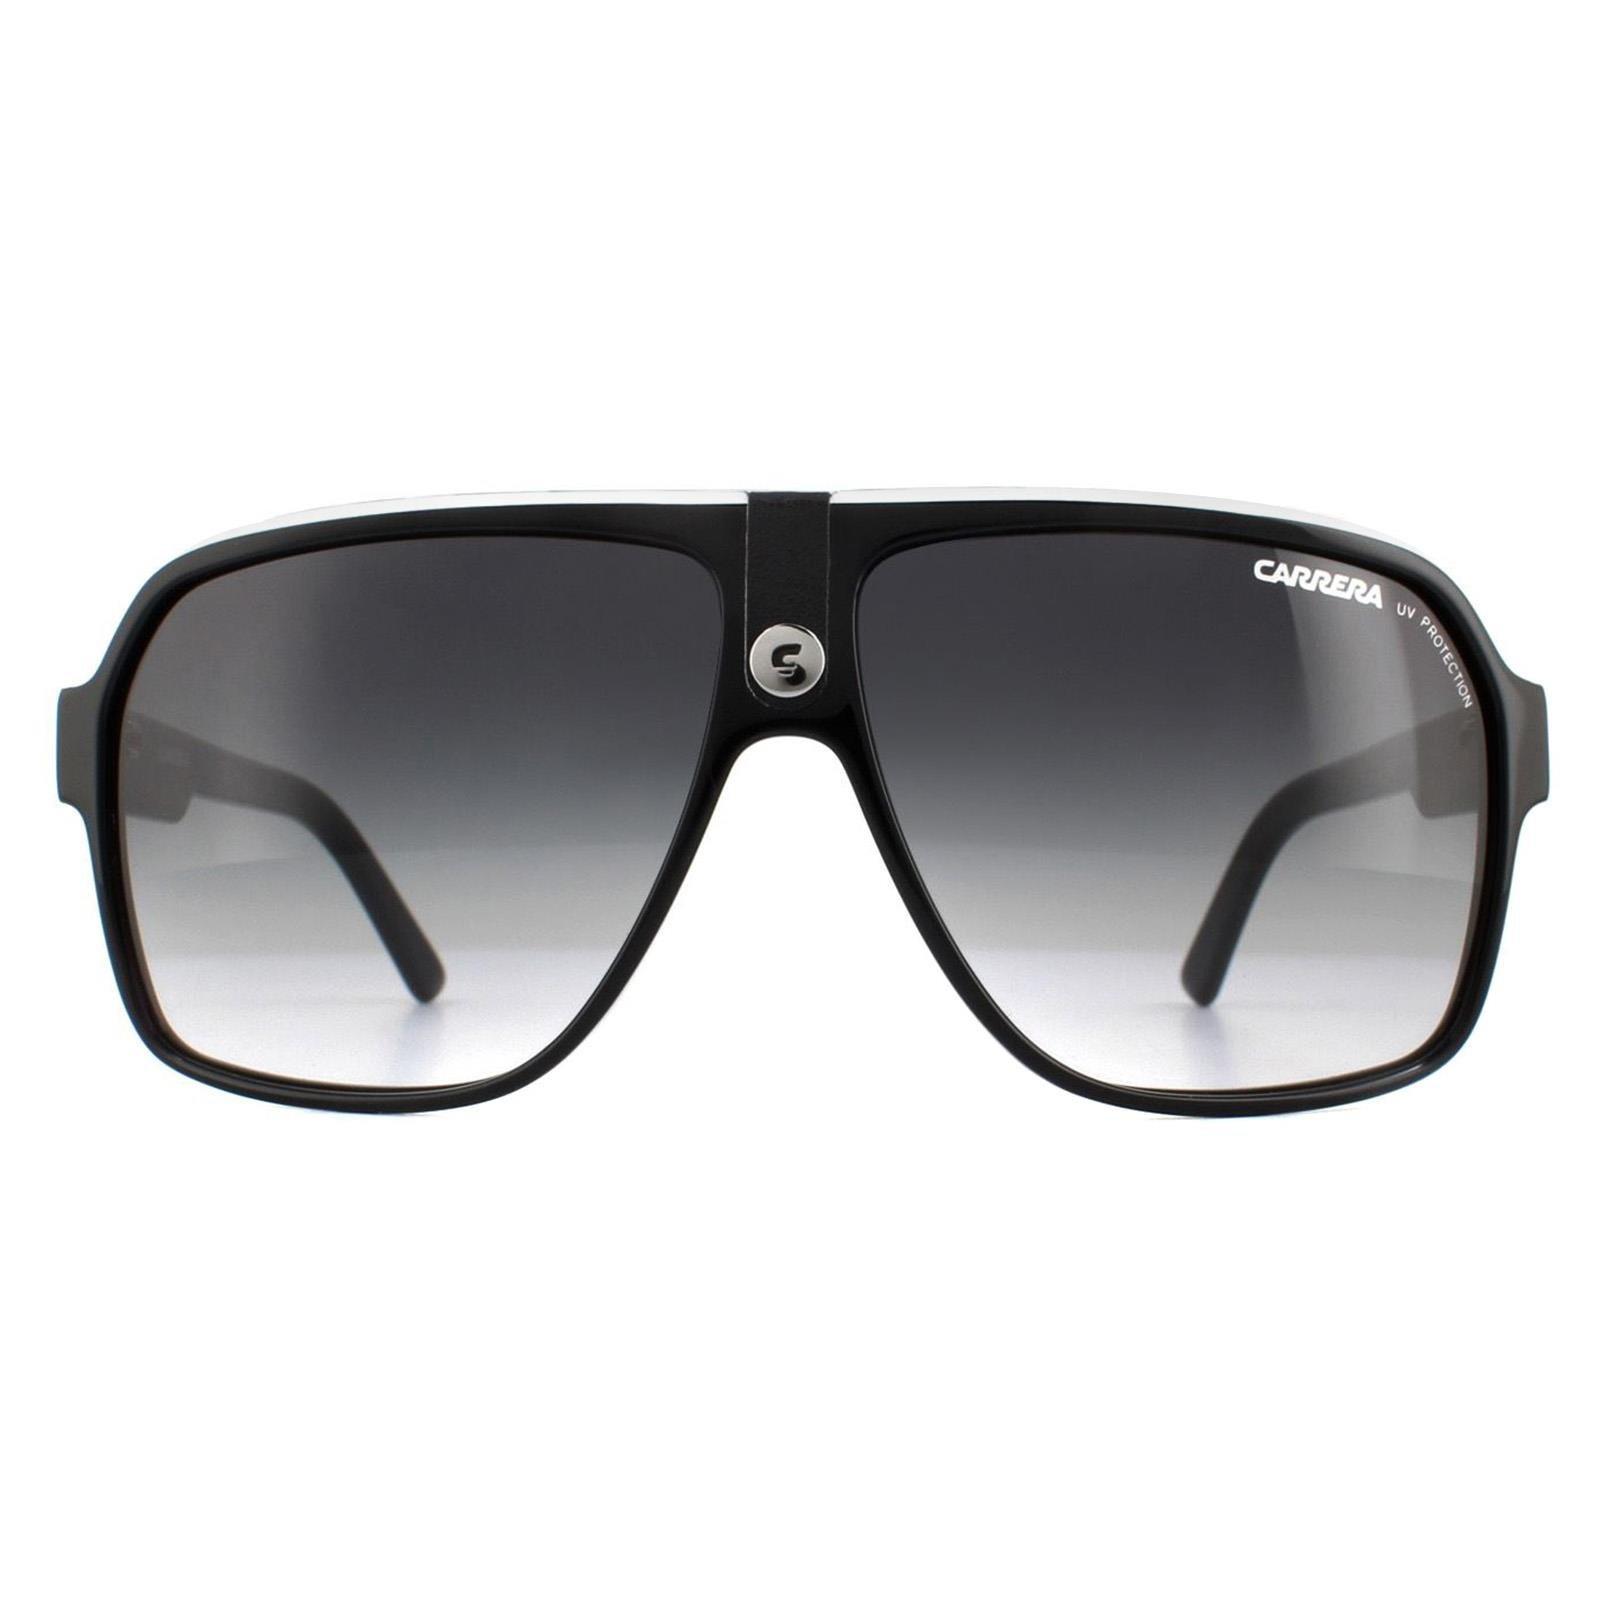 Aviator Black and White Grey Gradient Sunglasses